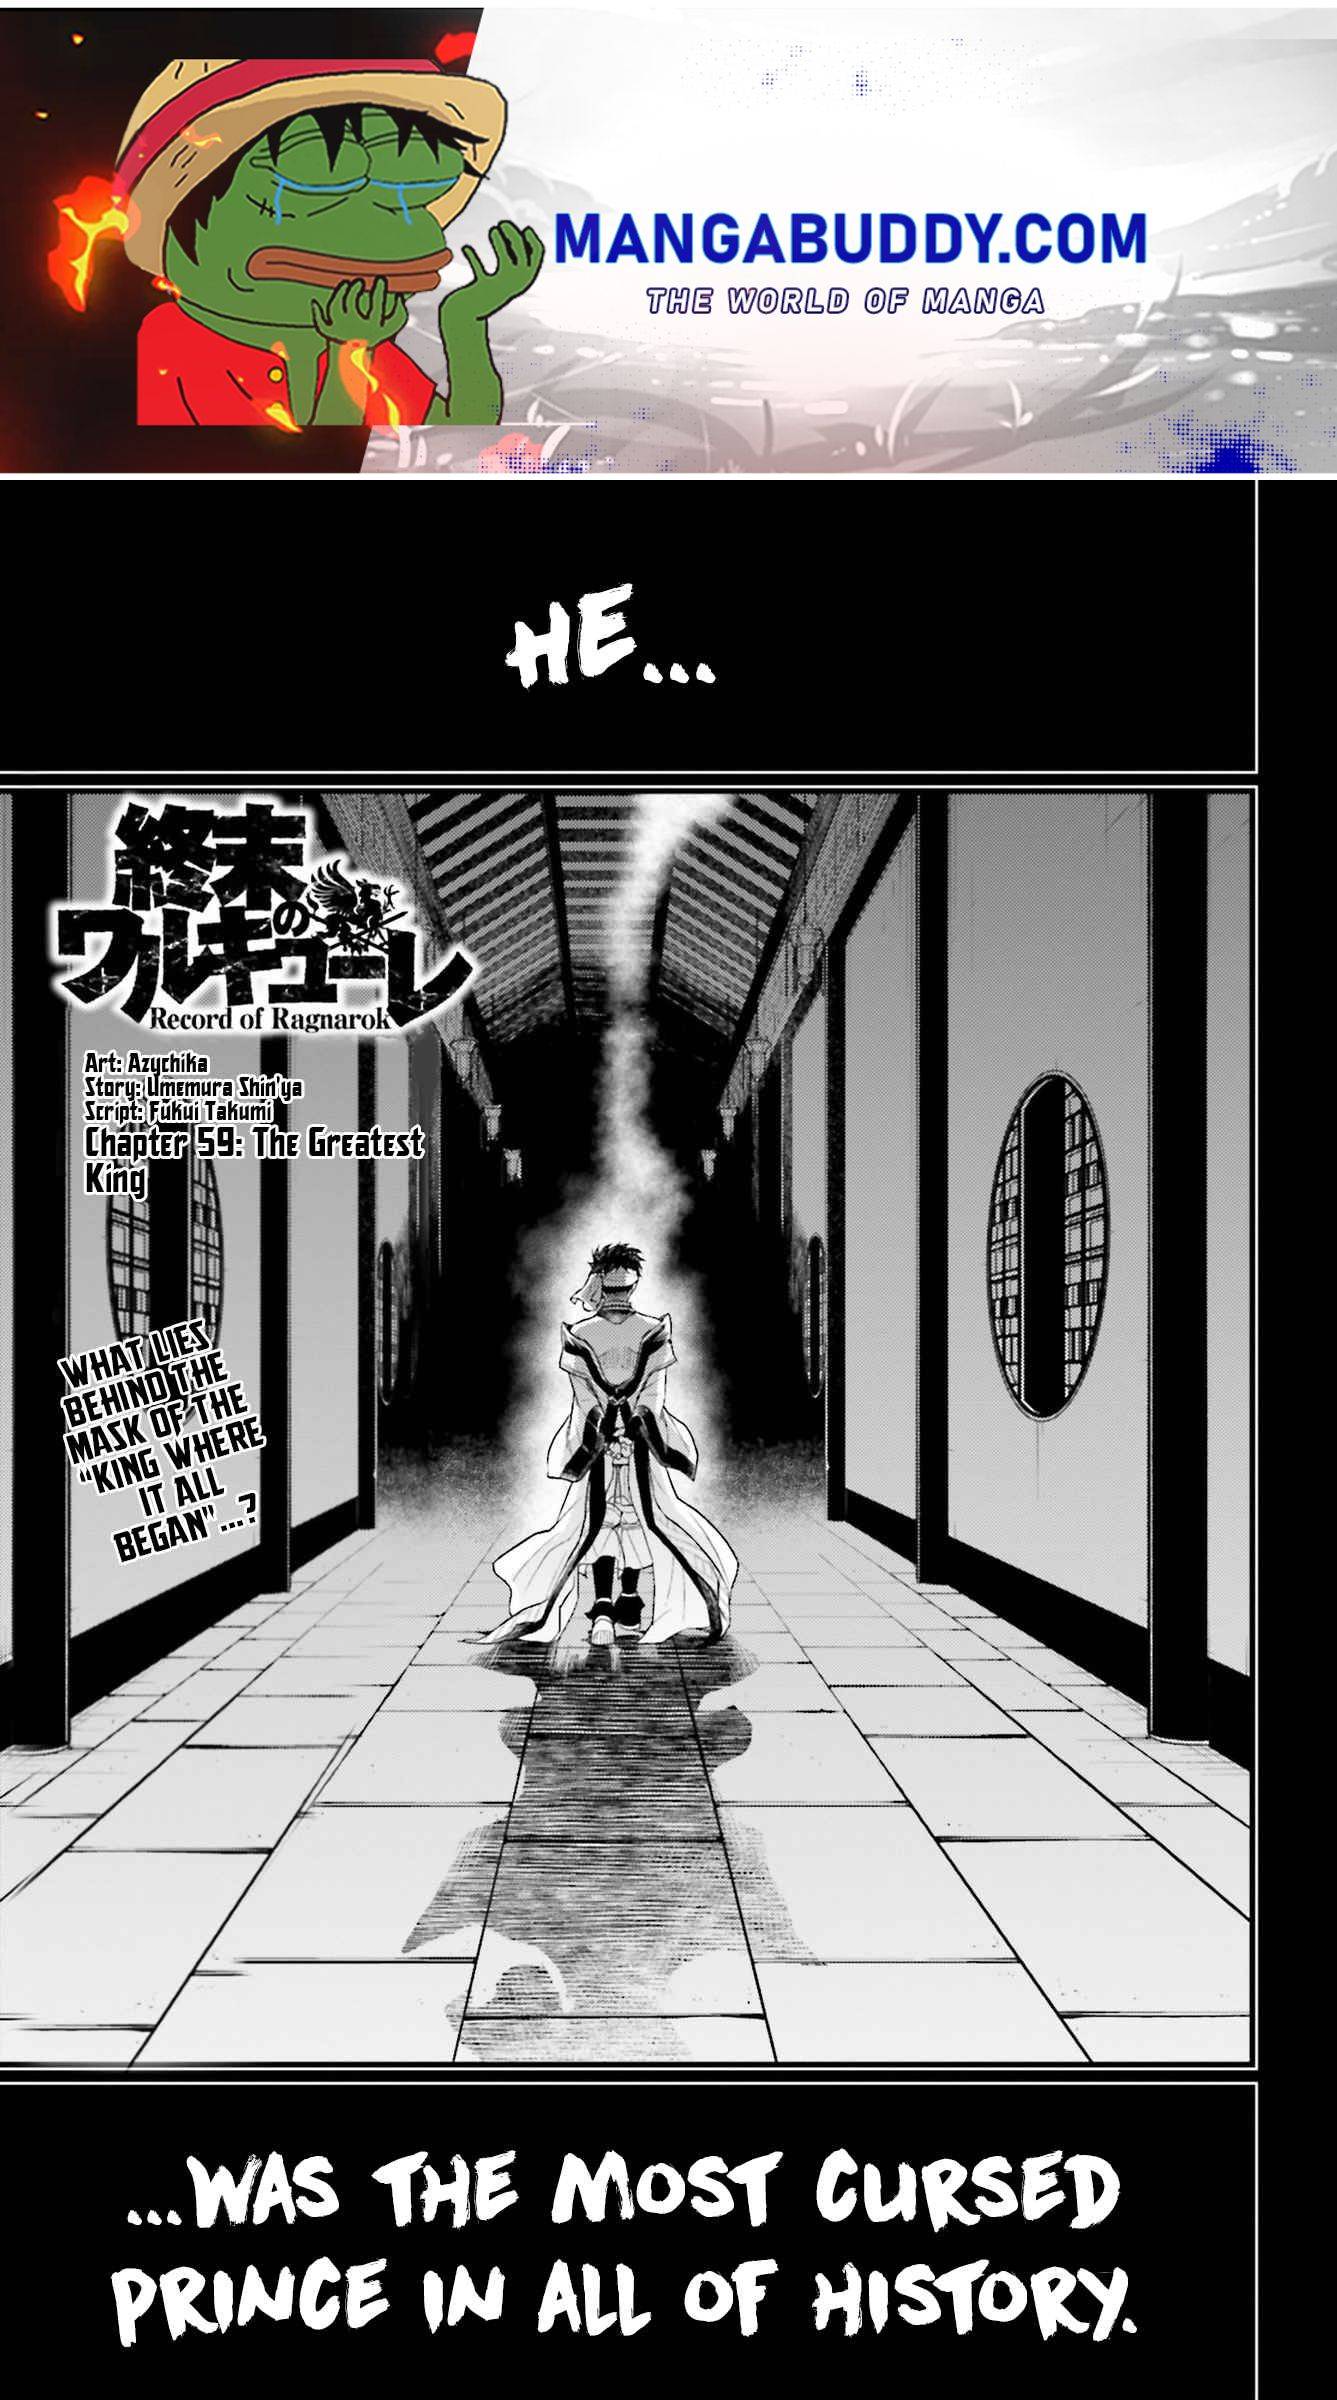 Read Shuumatsu no Valkyrie Manga Chapter 60 in English Free Online